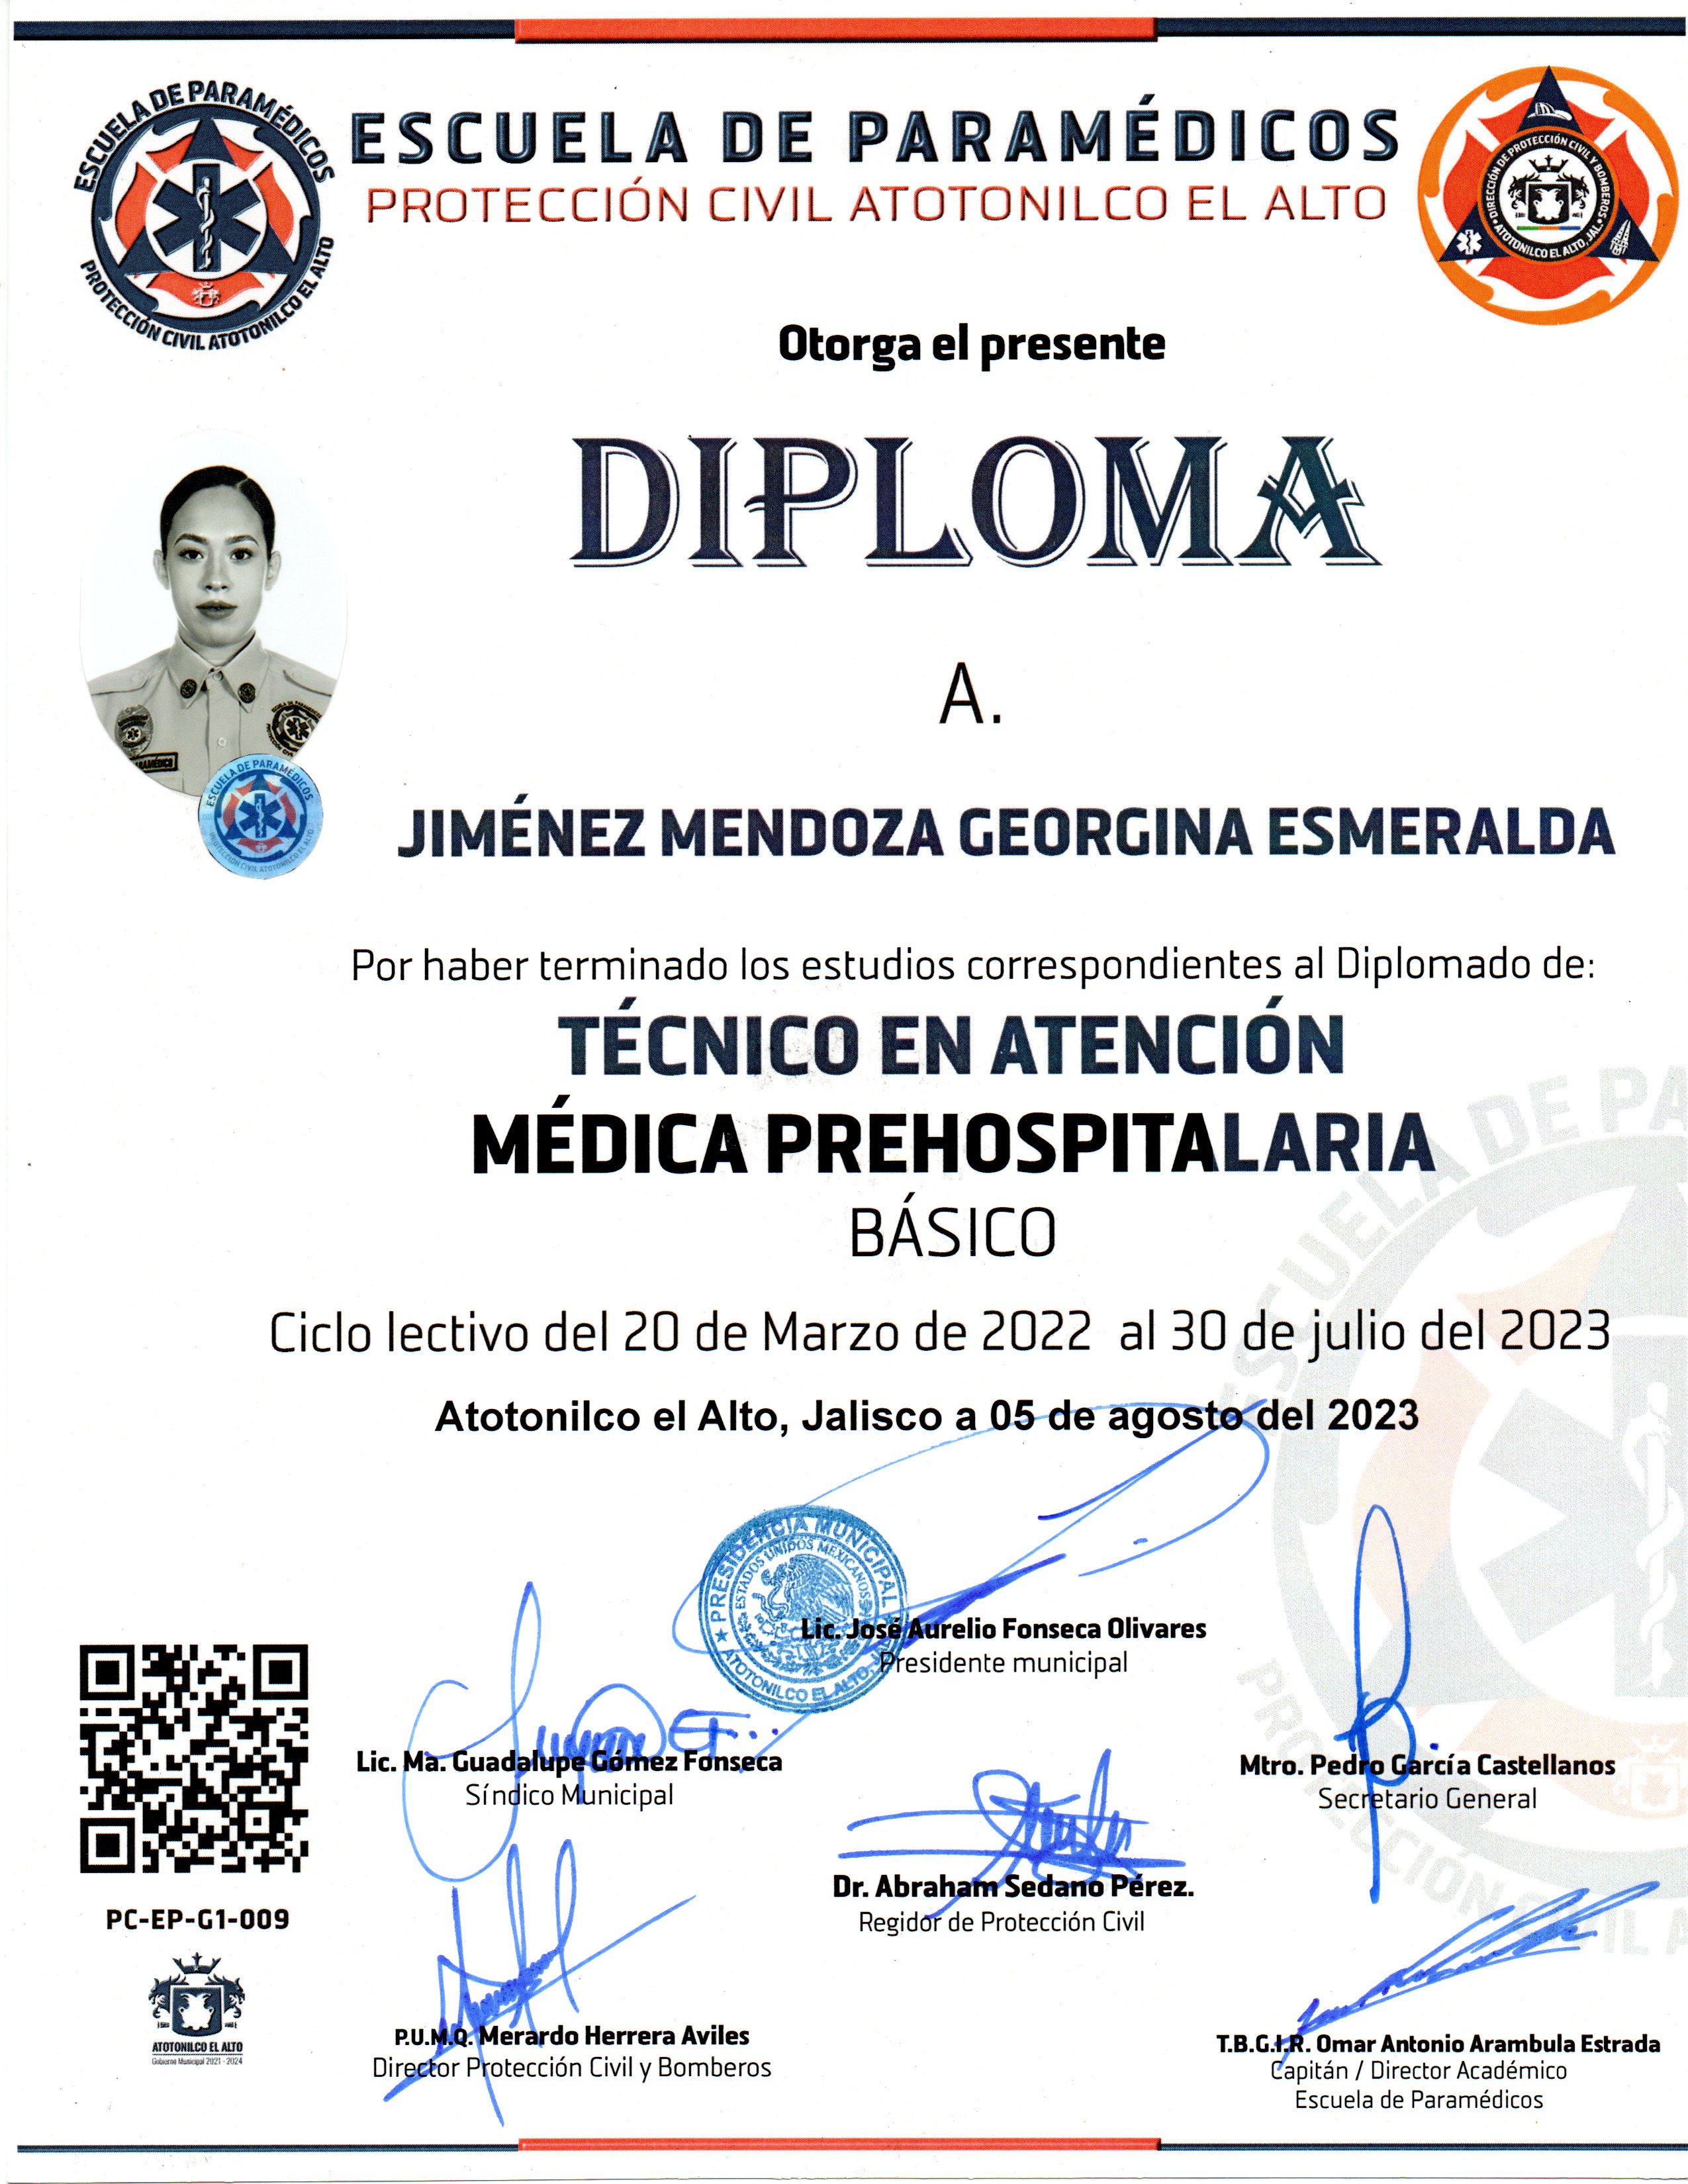 009 diploma jimenez mendoza georgina esmeralda